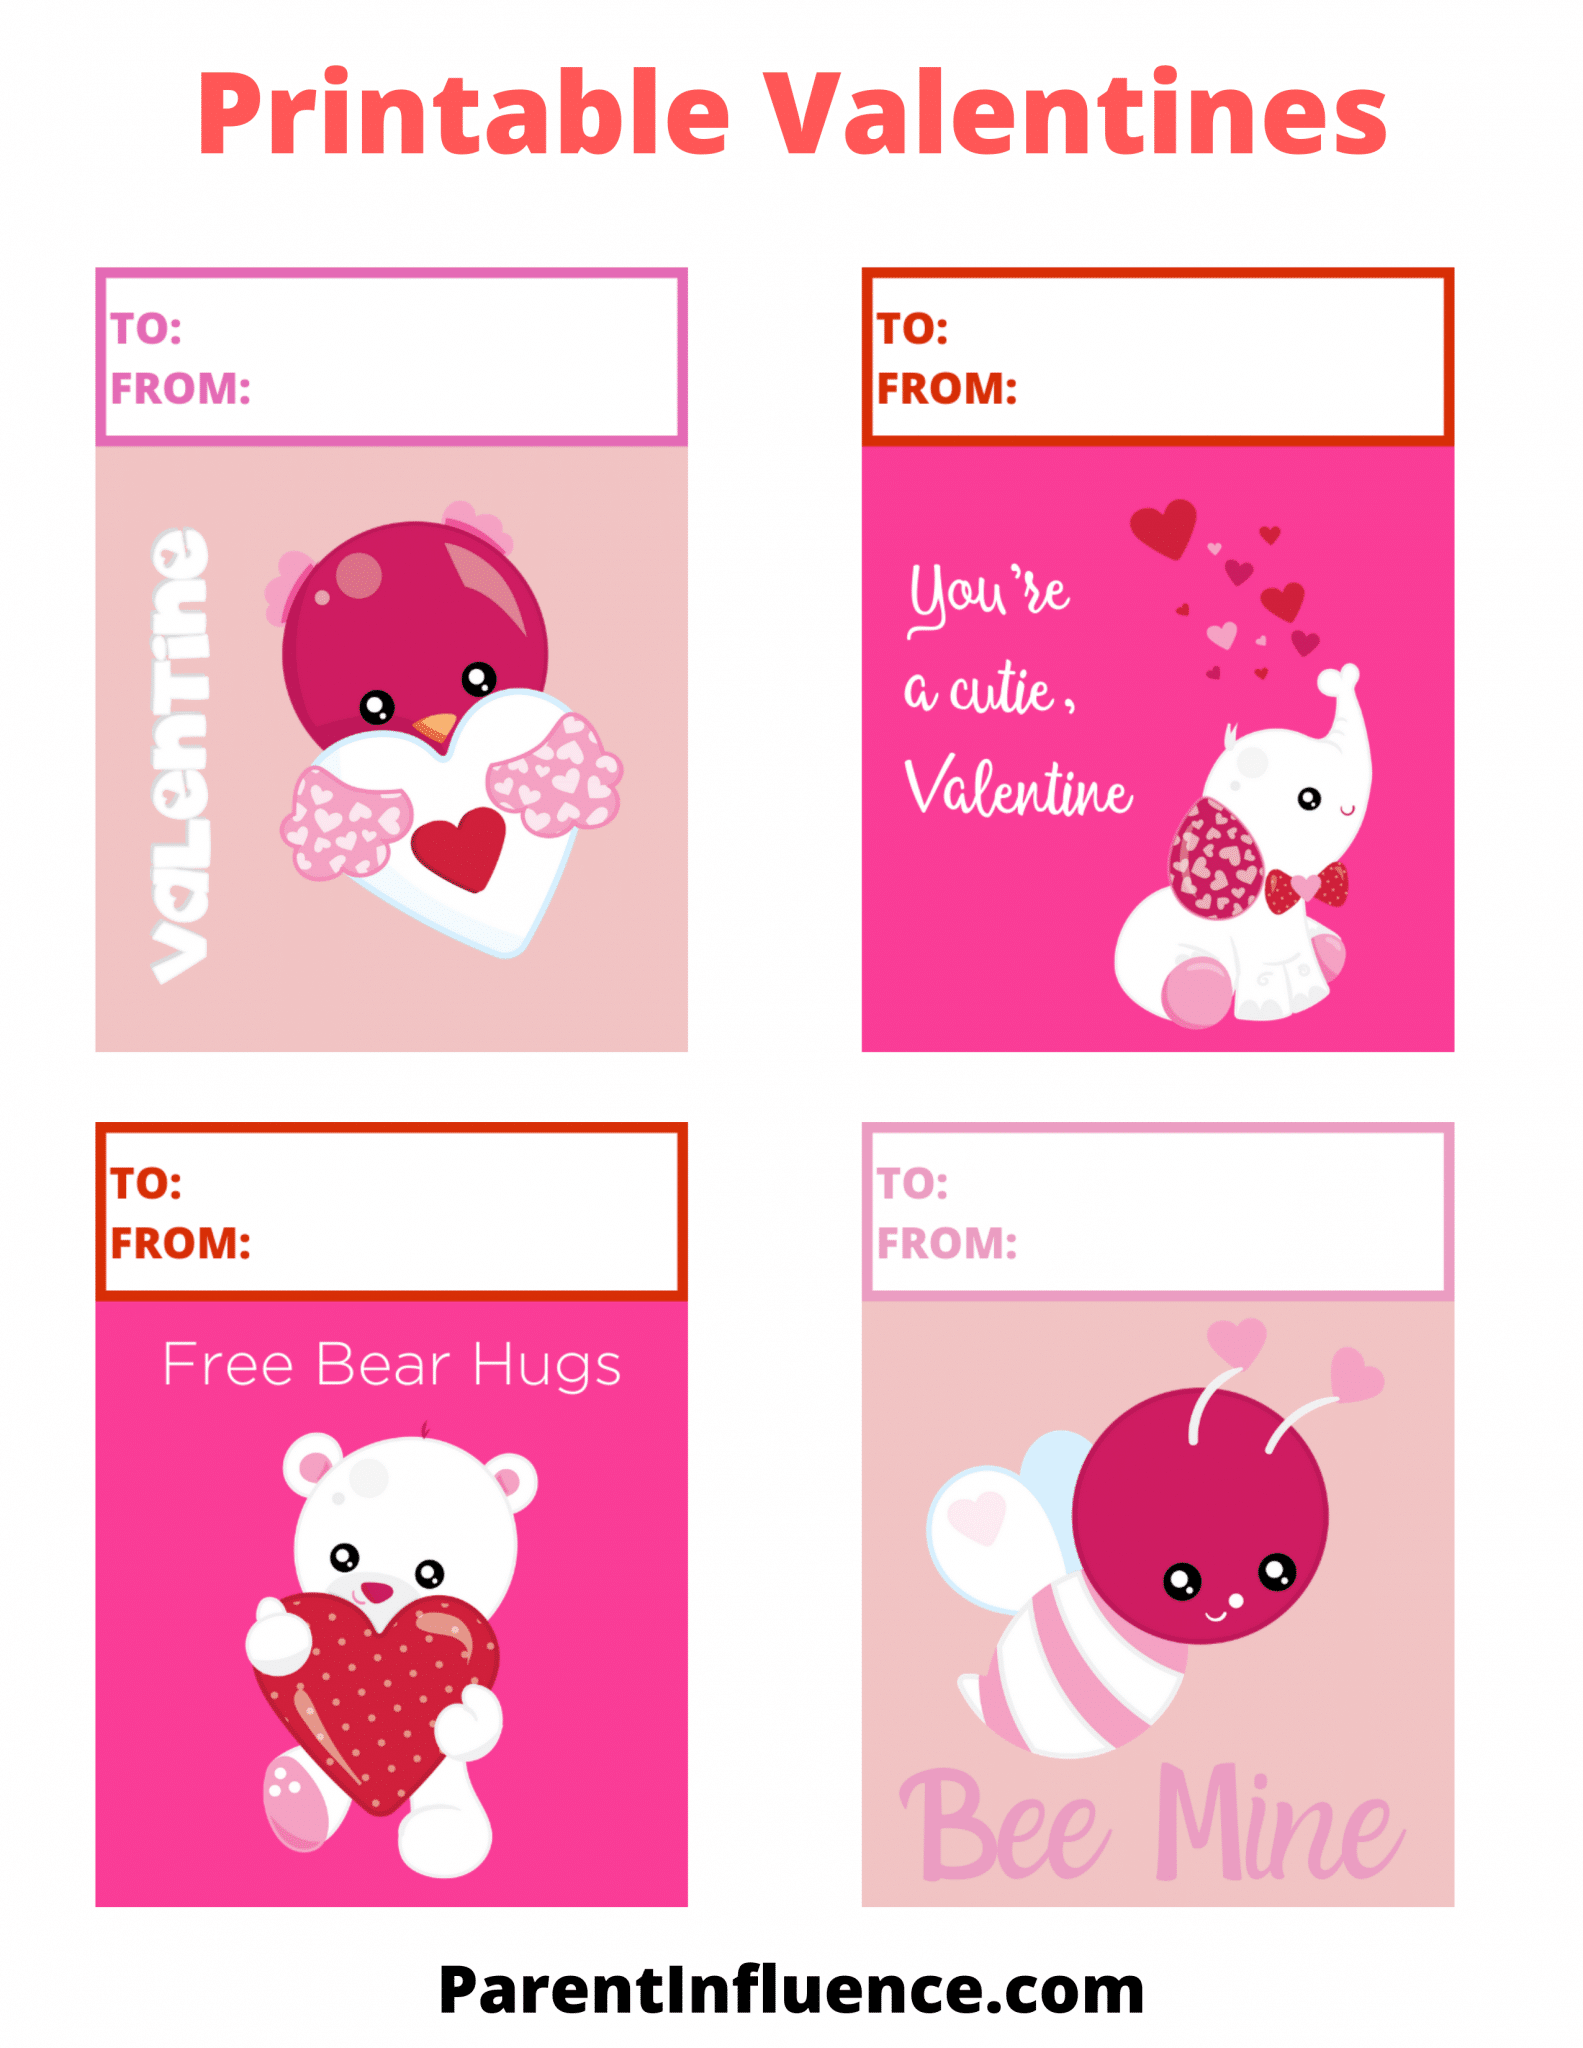 DIY Valentine’s Day Cards for Kids